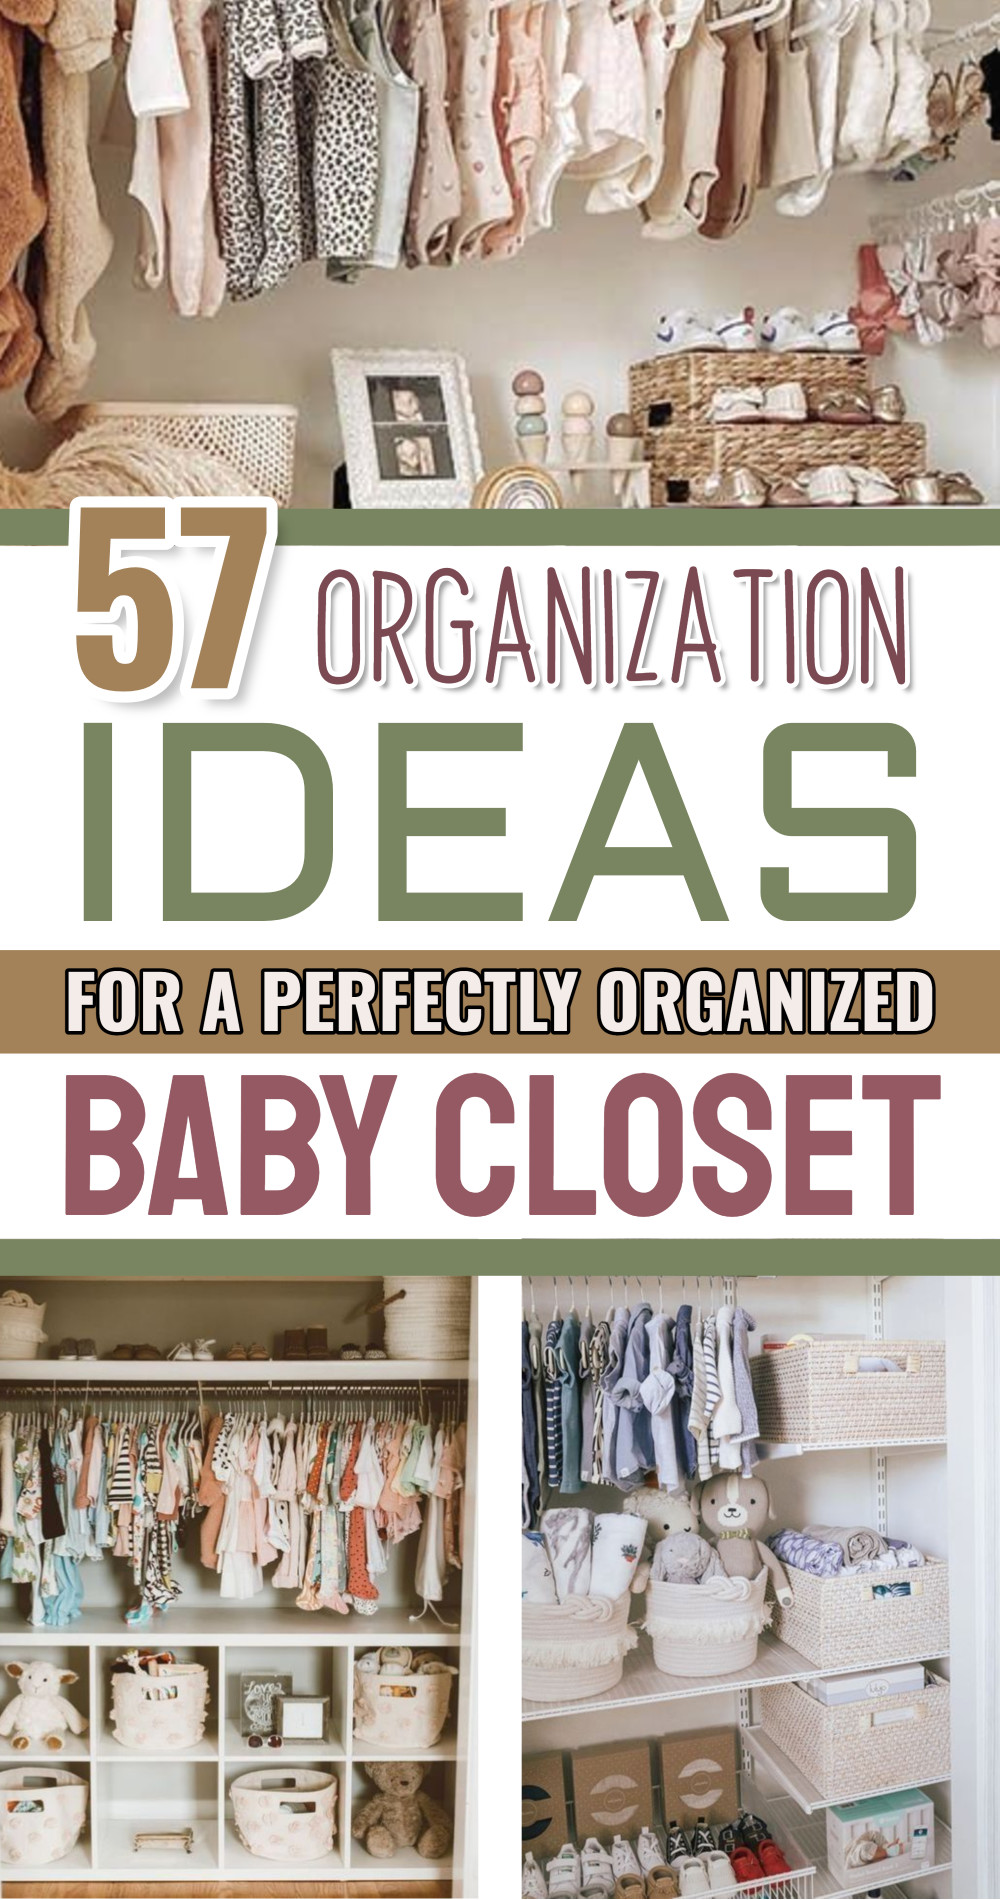 57 Nursery Organization Ideas For a Perfectly Organized Baby Closet